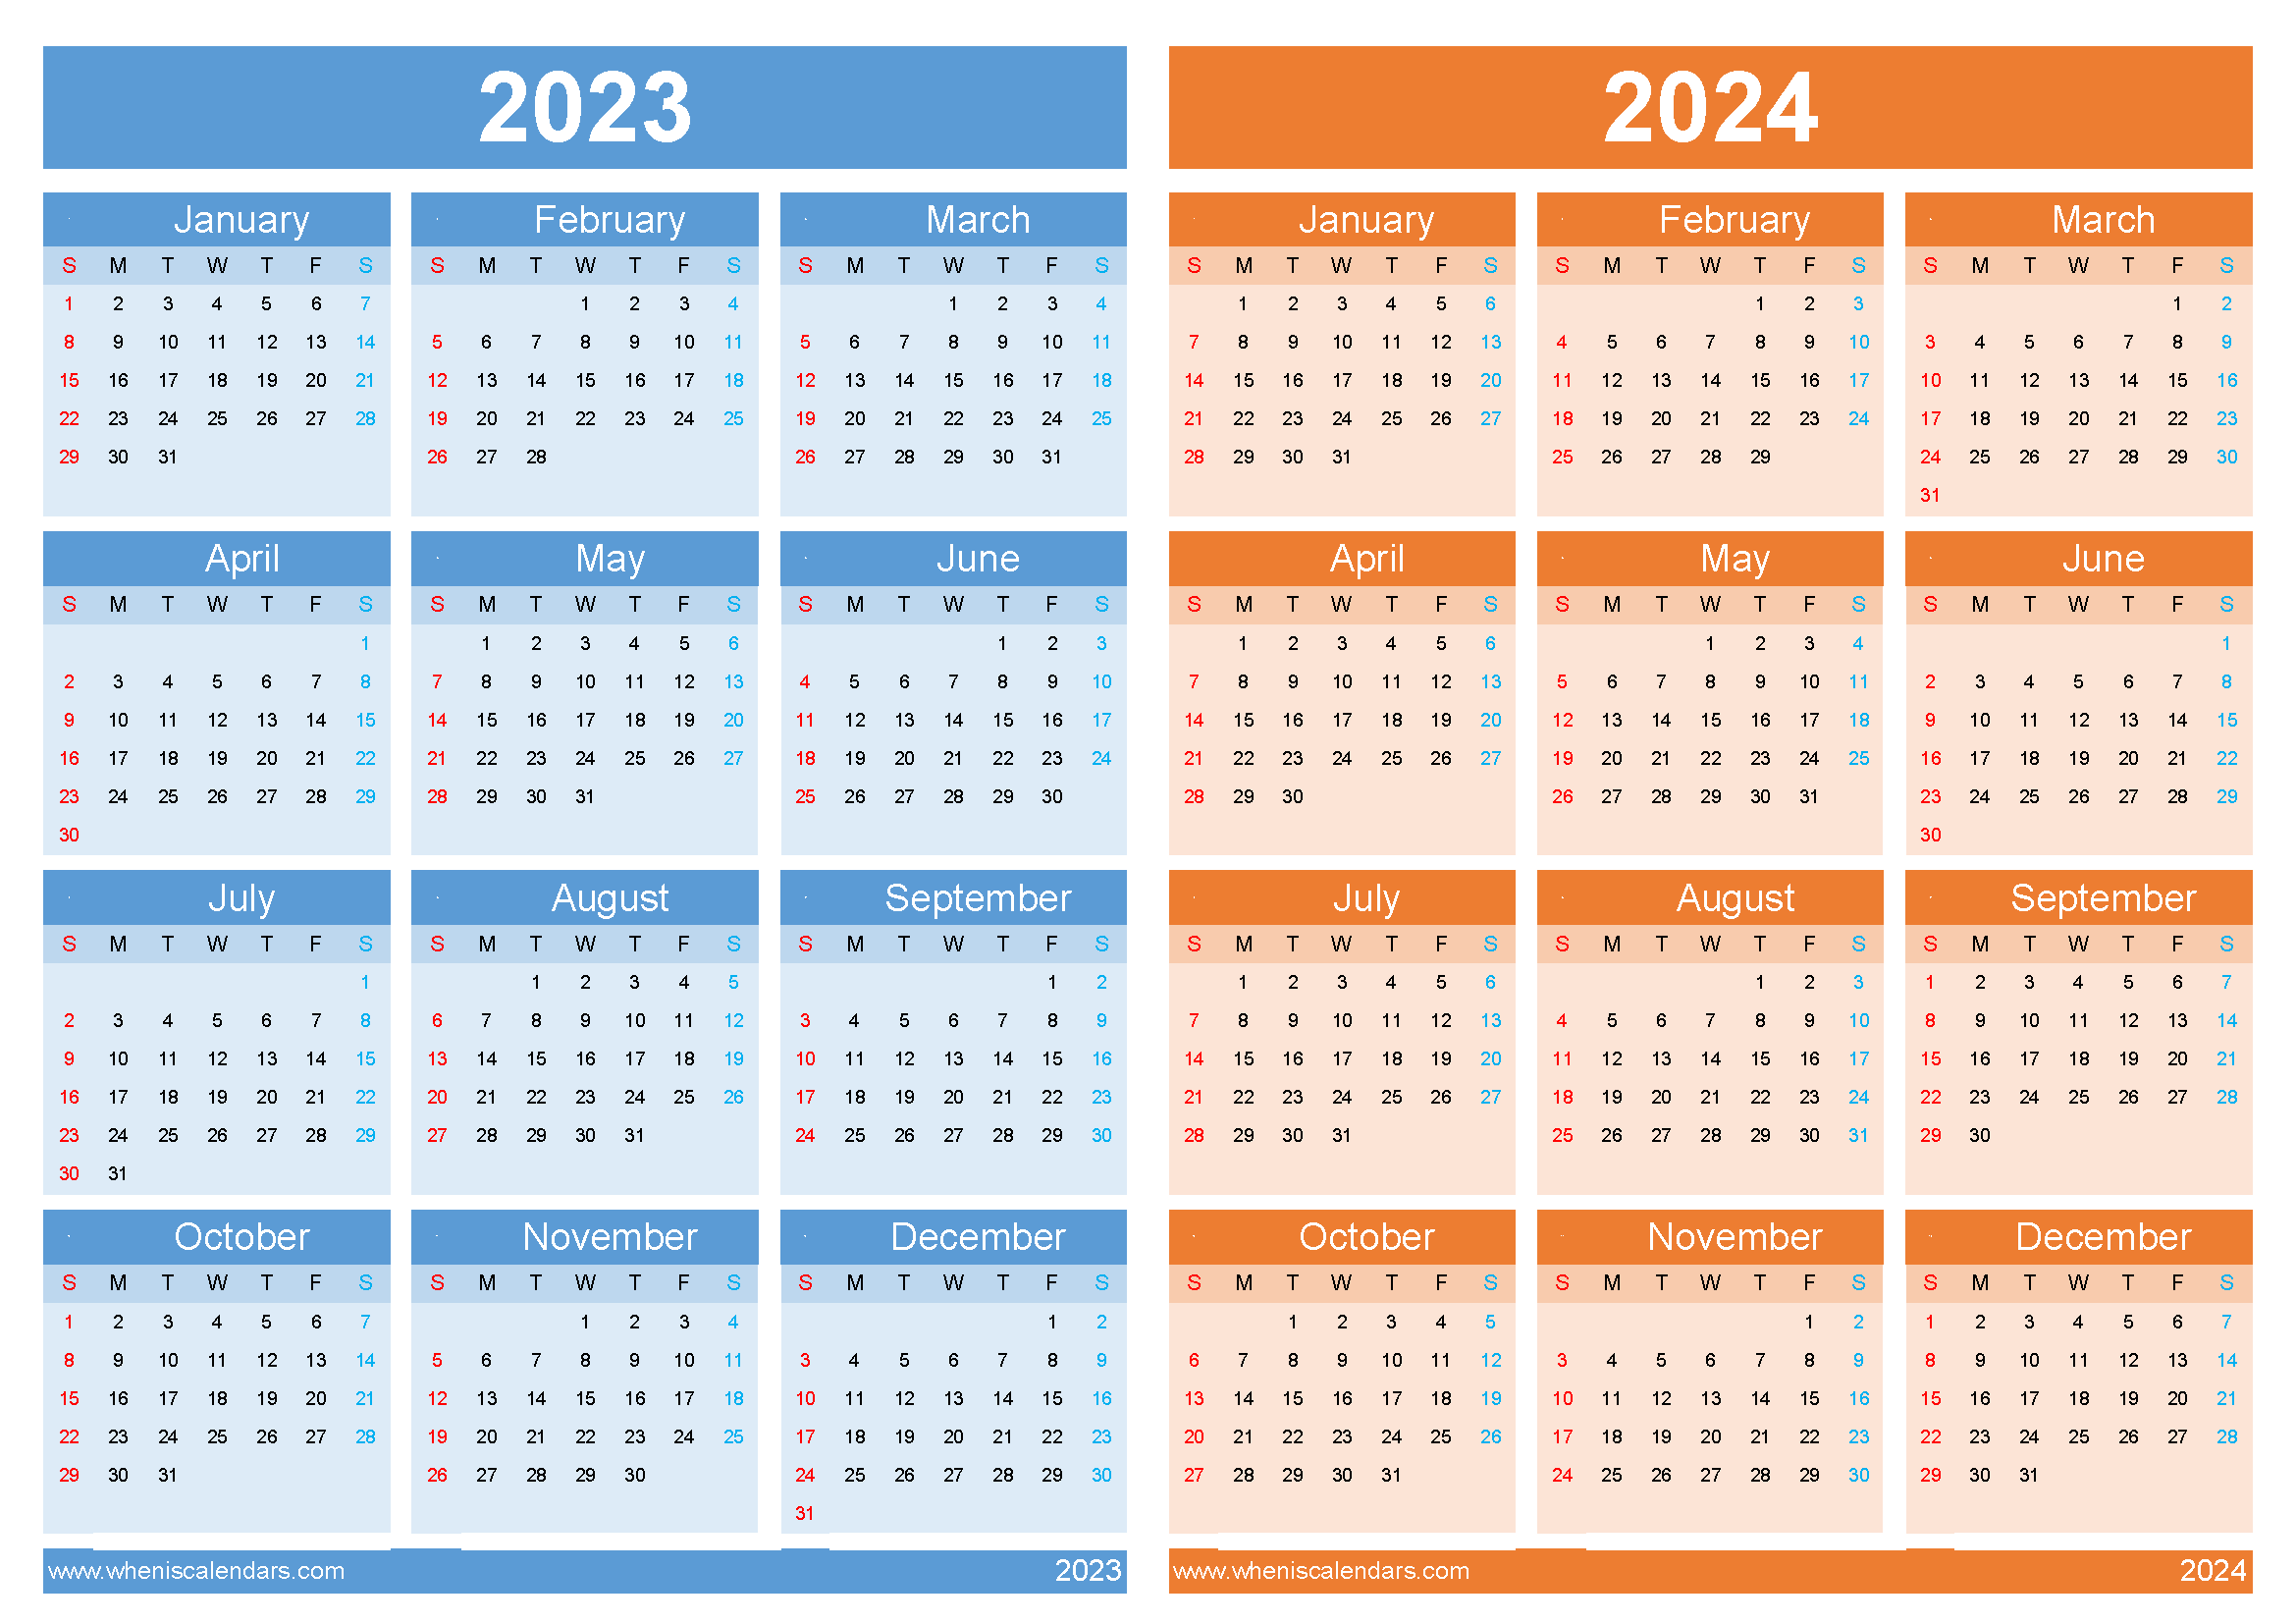 2023 and 2024 calendar printable 34Y03